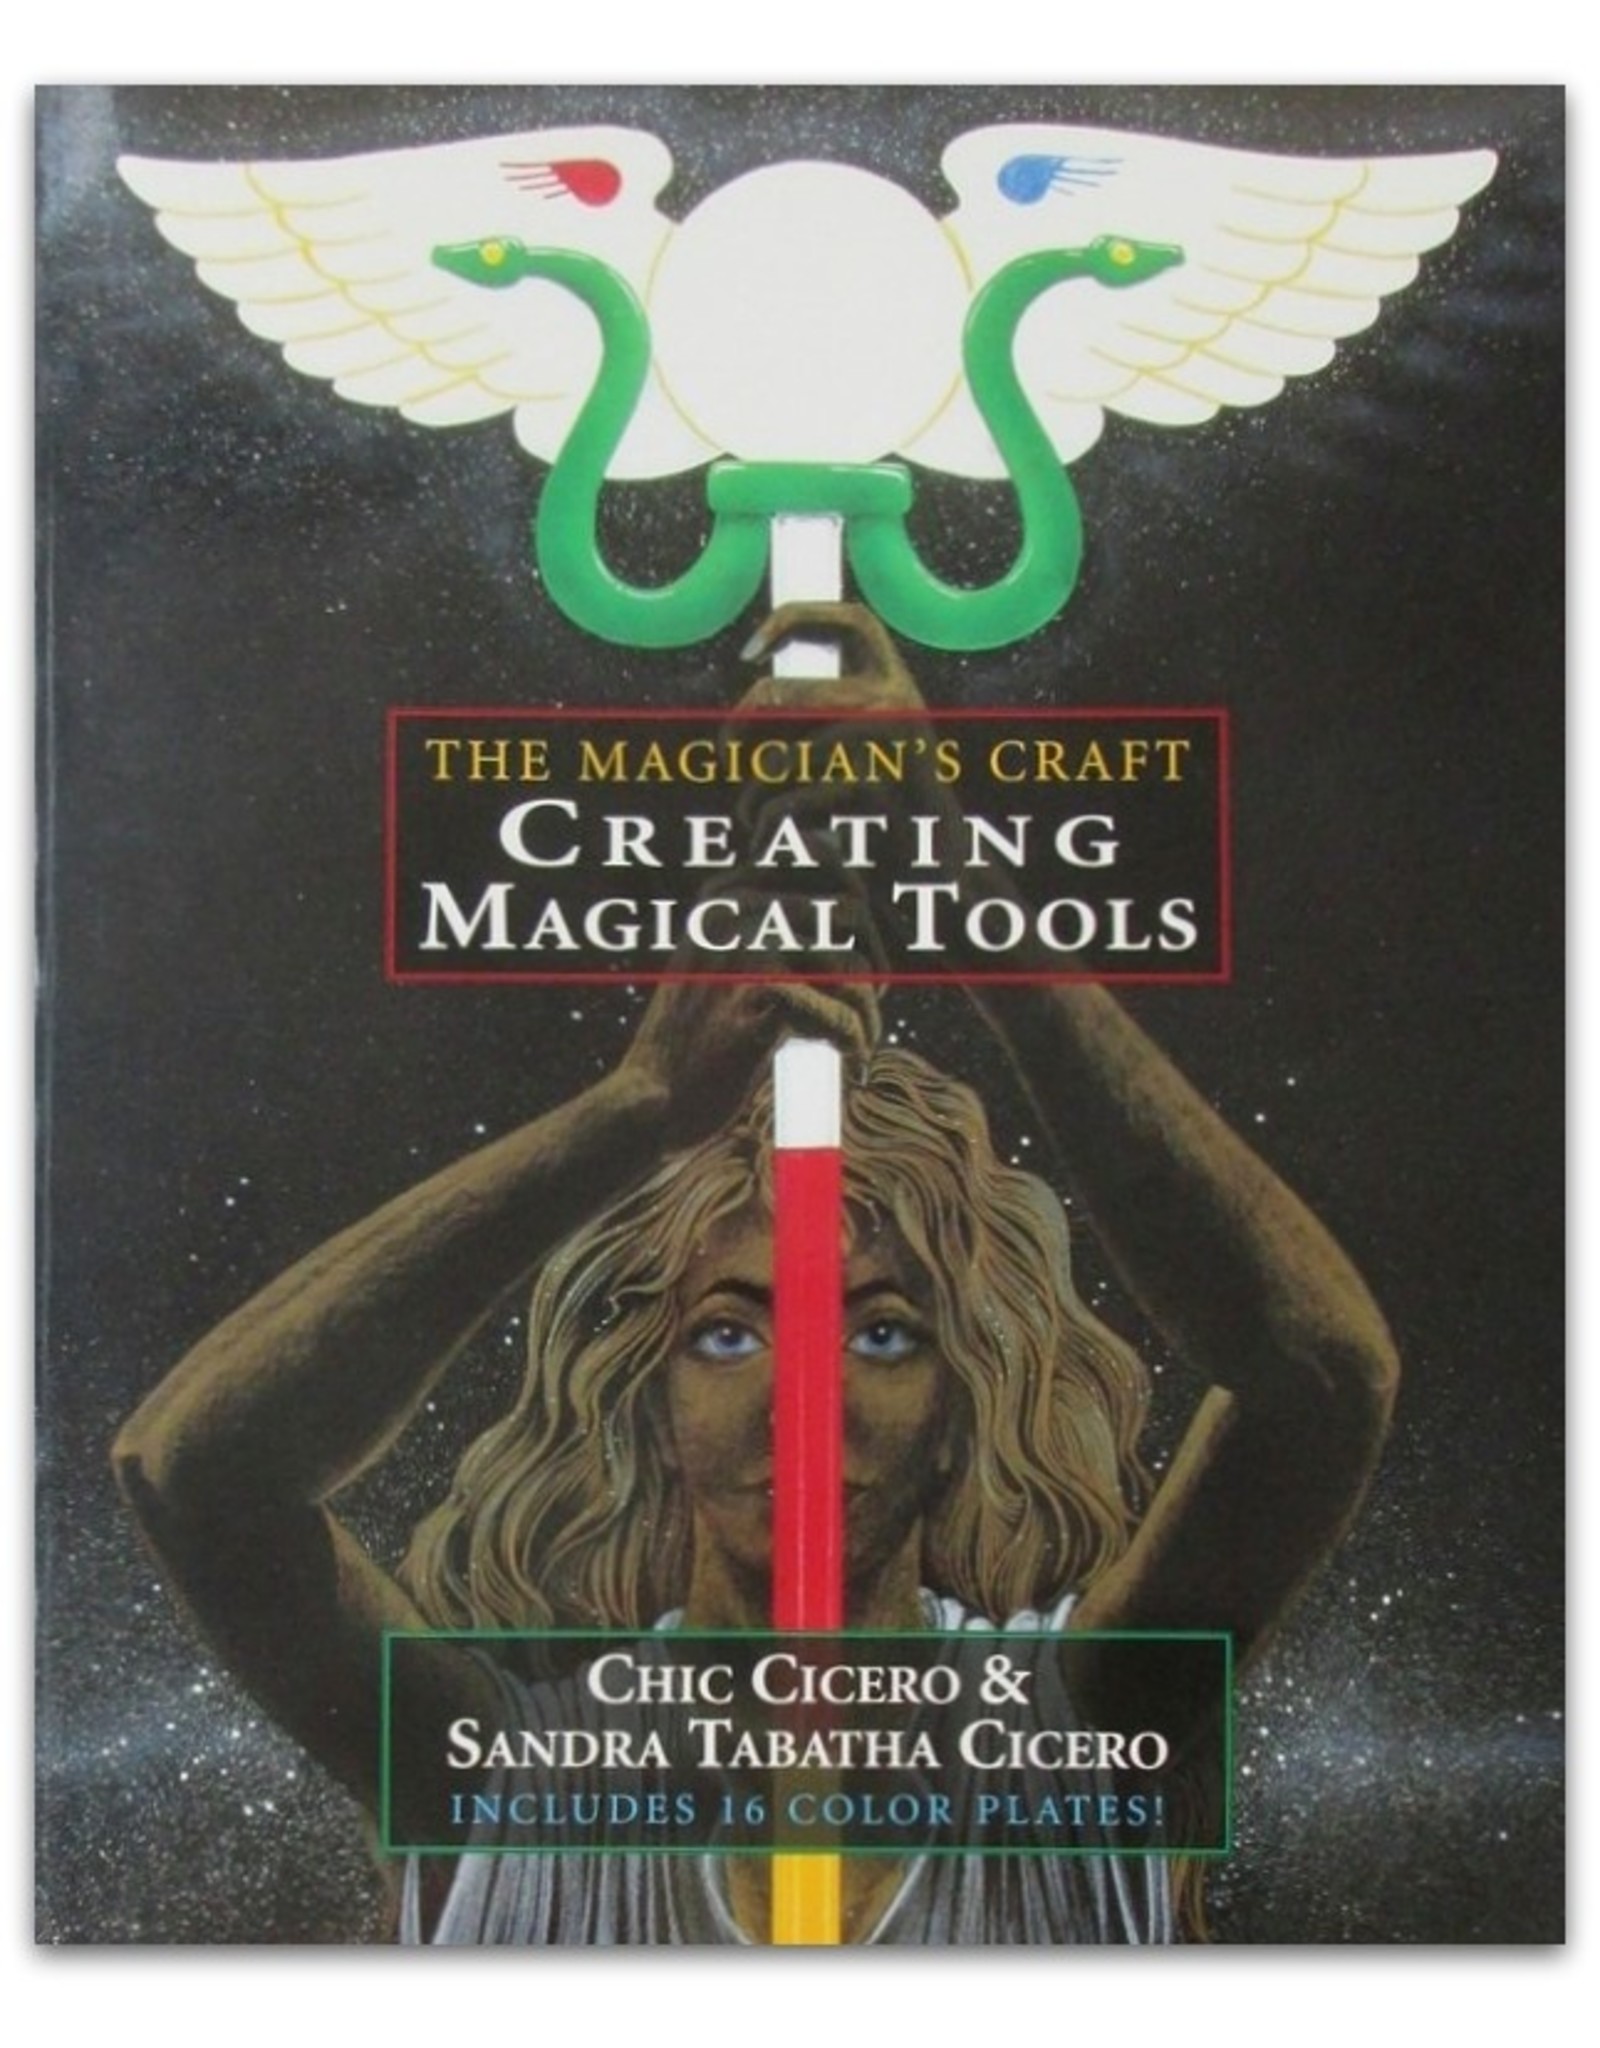 Chic Cicero & Sandra Tabatha Cicero - The Magician's Craft: Creating Magical Tools